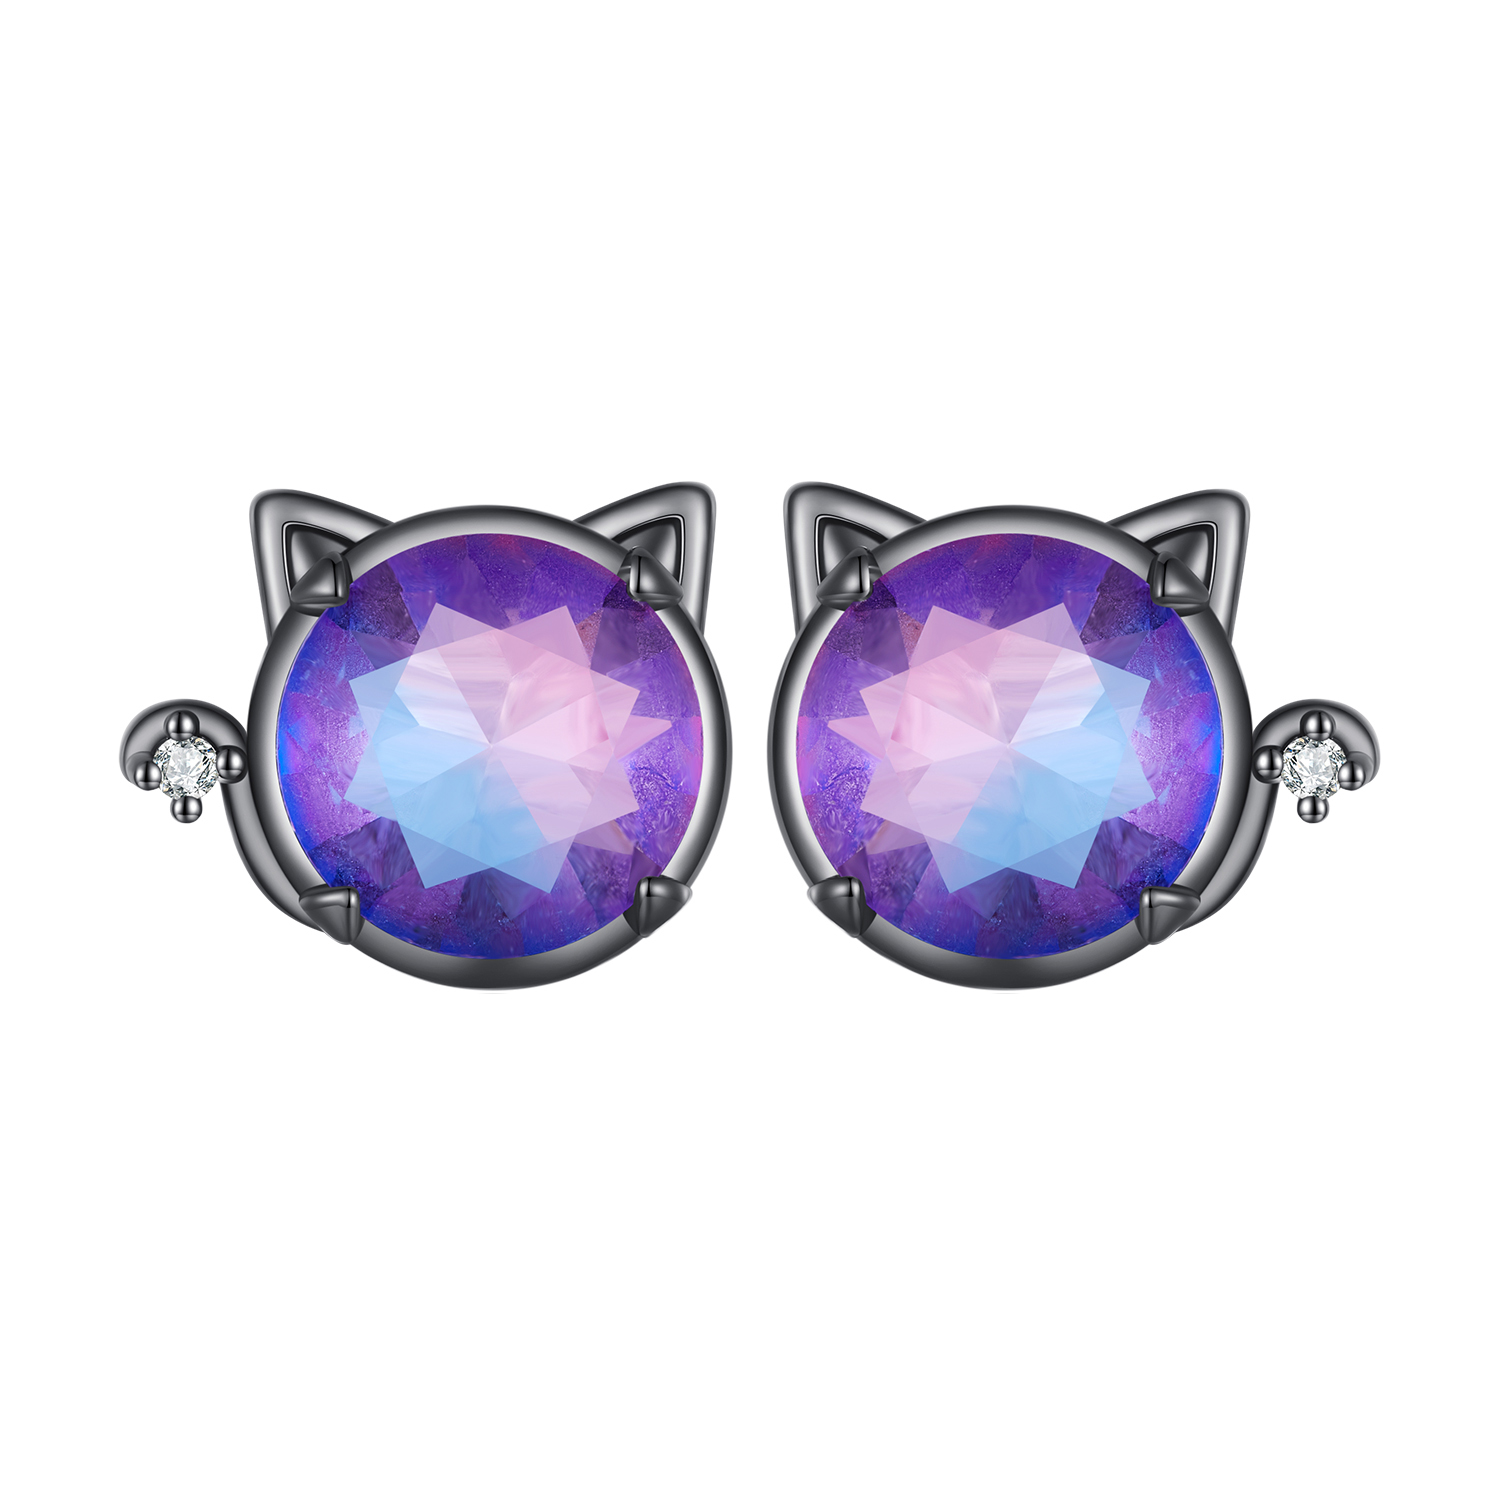 pandora style cat studs earrings sce1568